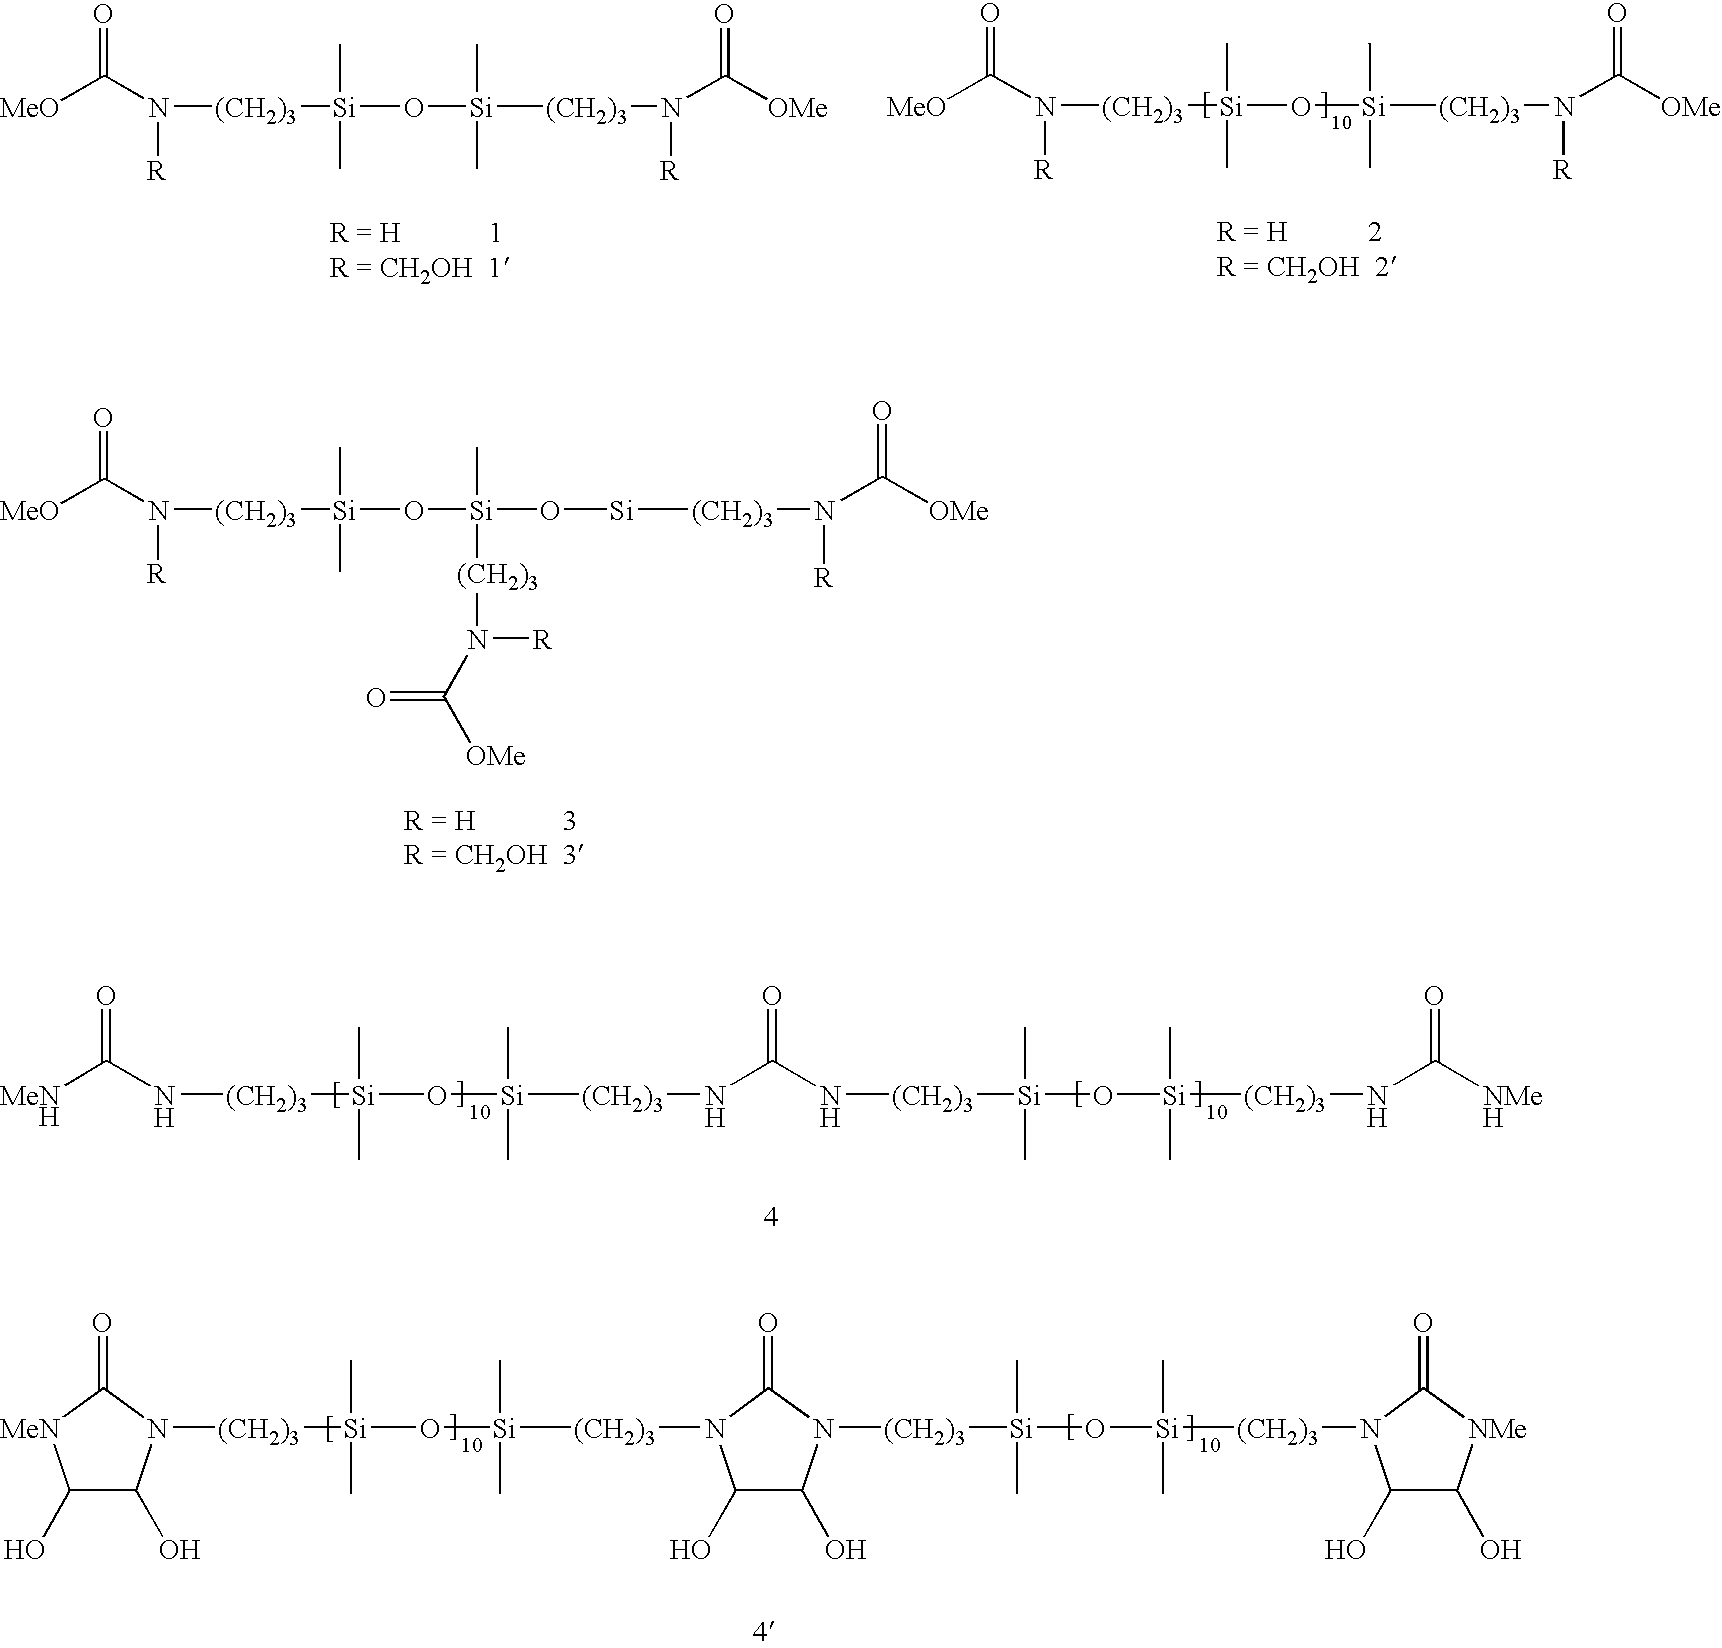 Siloxanes containing methylol groups